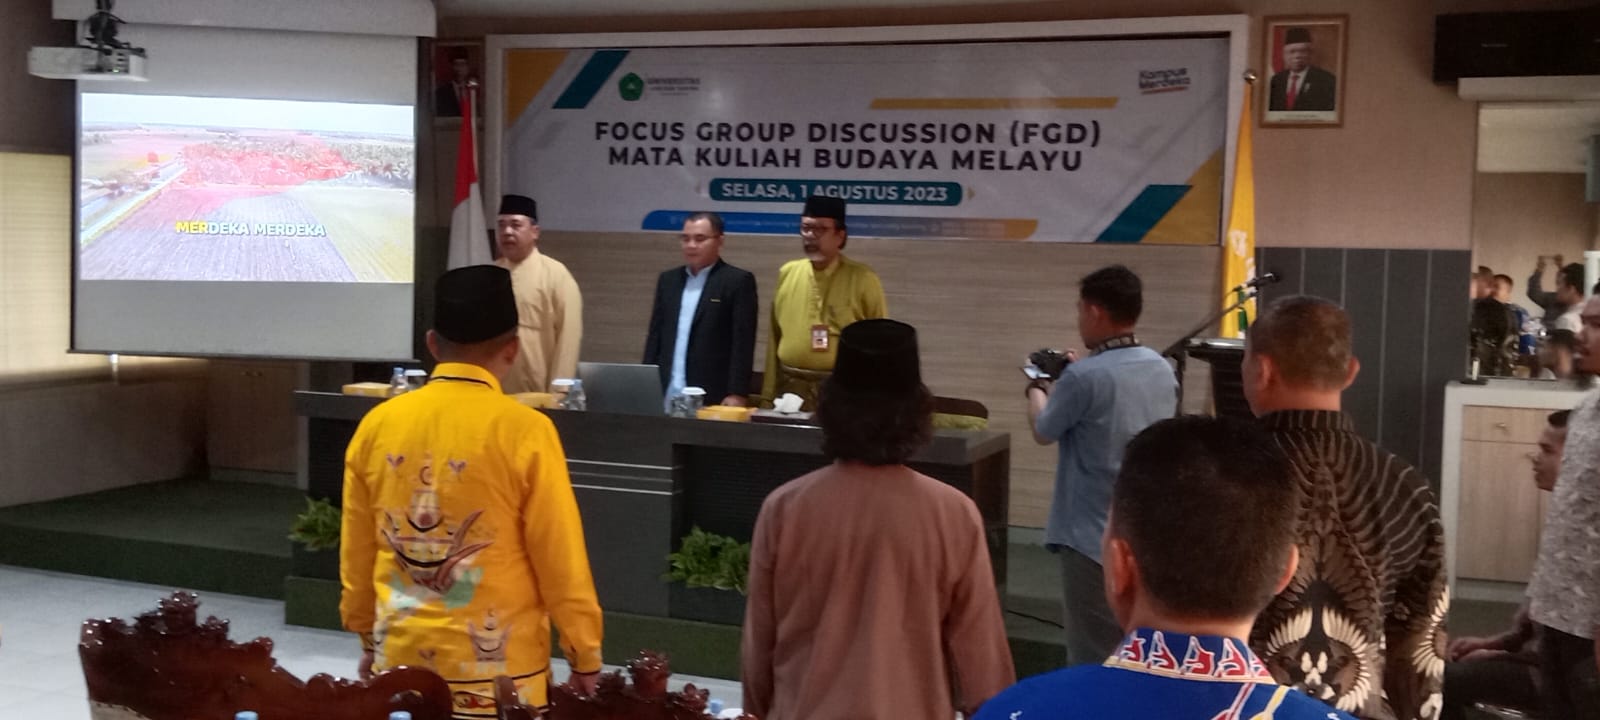 FGD bahas mata kuliah Budaya Melayu